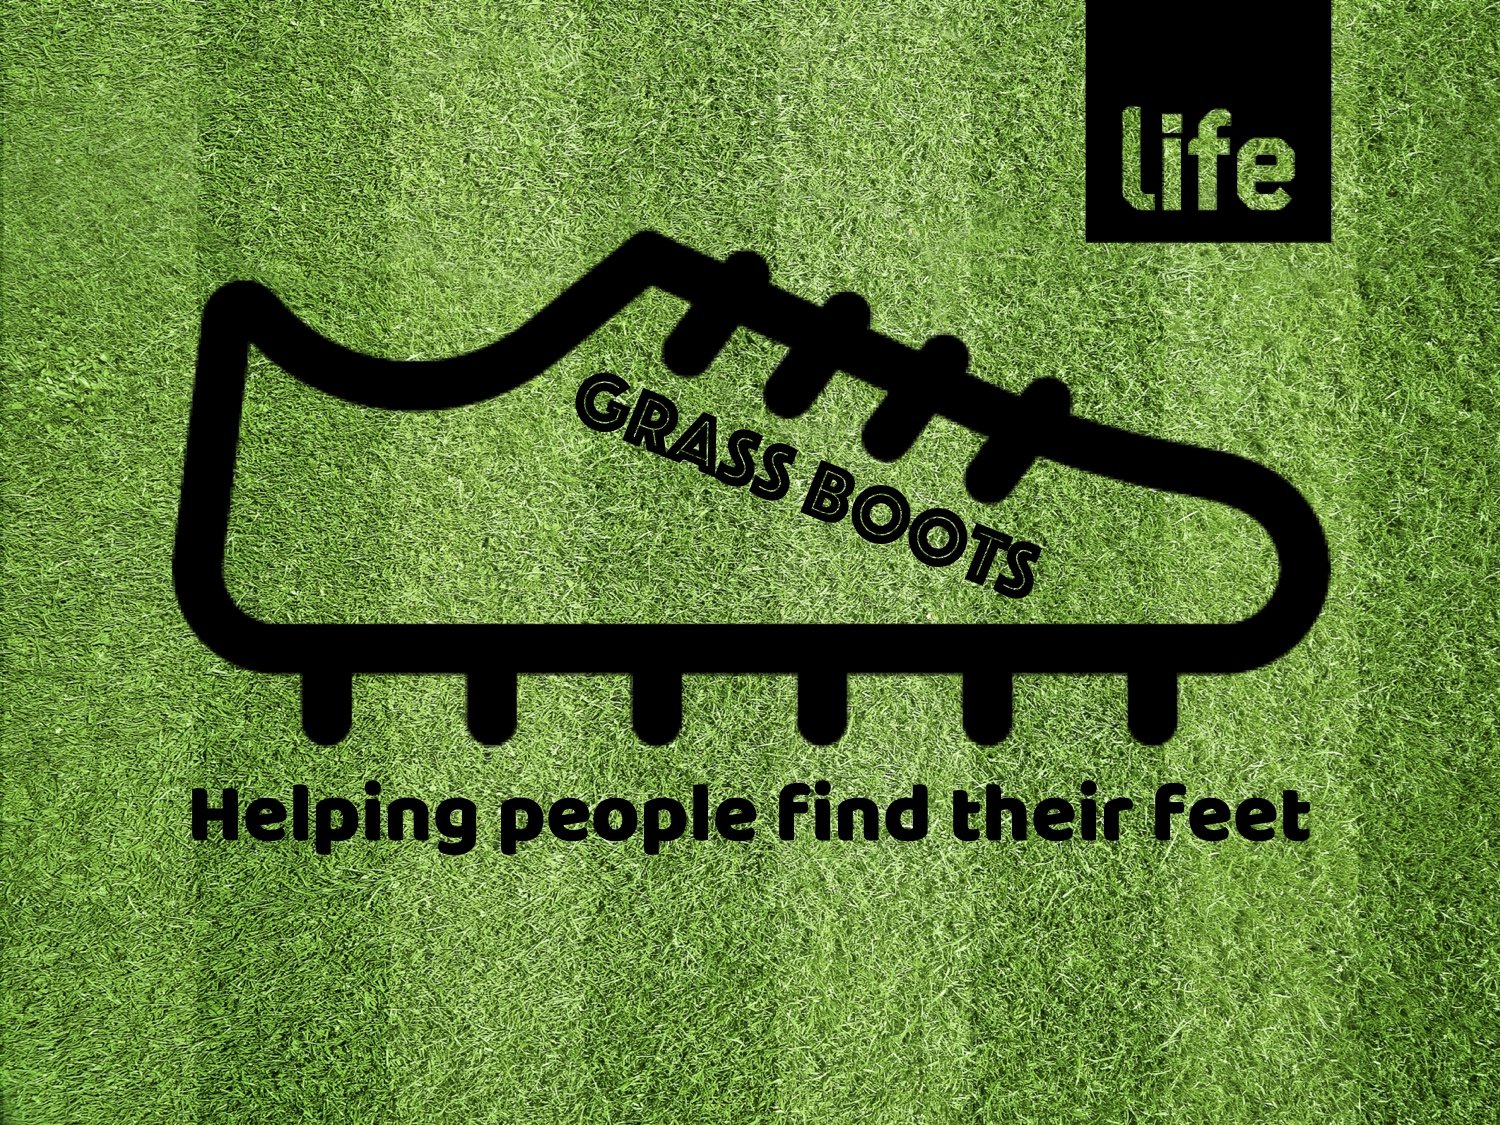 Grass Boots Logo v2.jpg